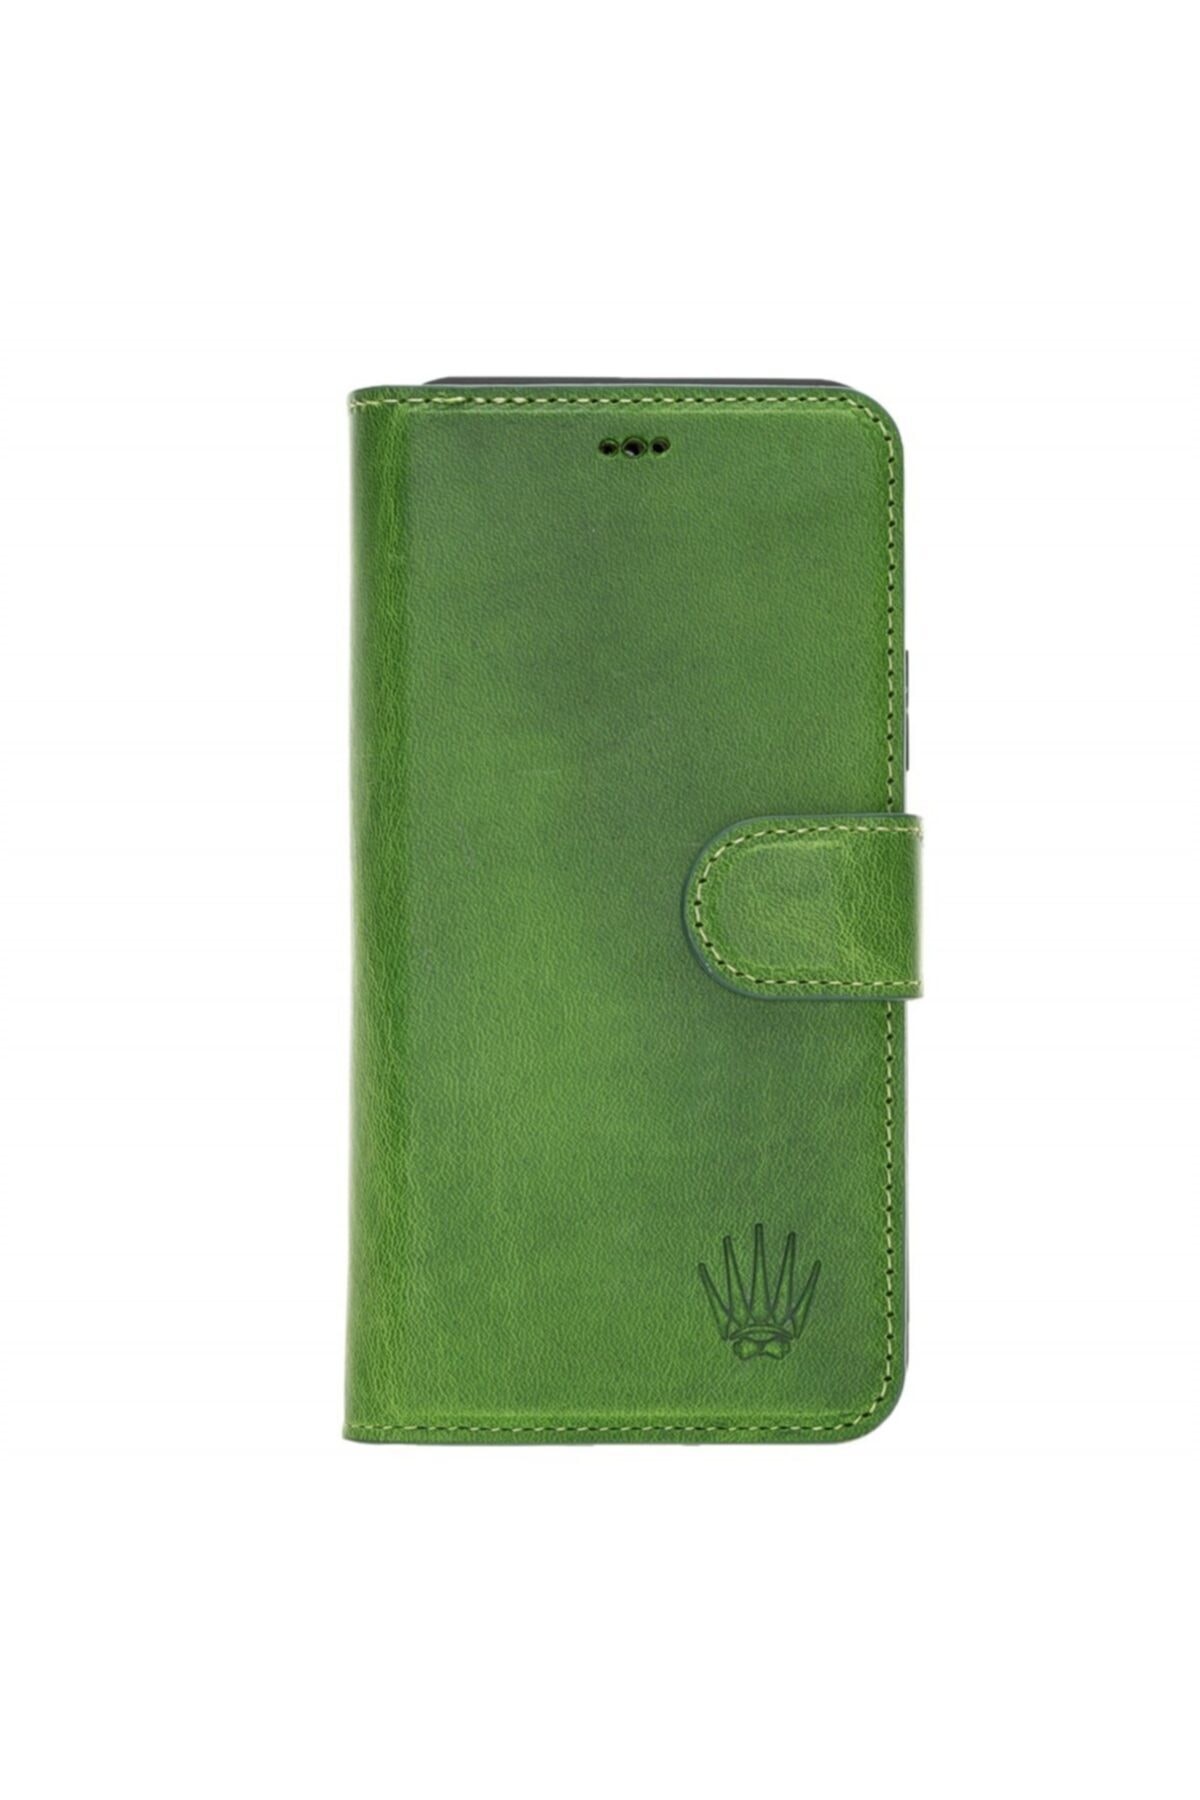 WATCHOFROYAL Magıc Wallet Iphone 11 Pro Yeşil Cuzdan Kılıf